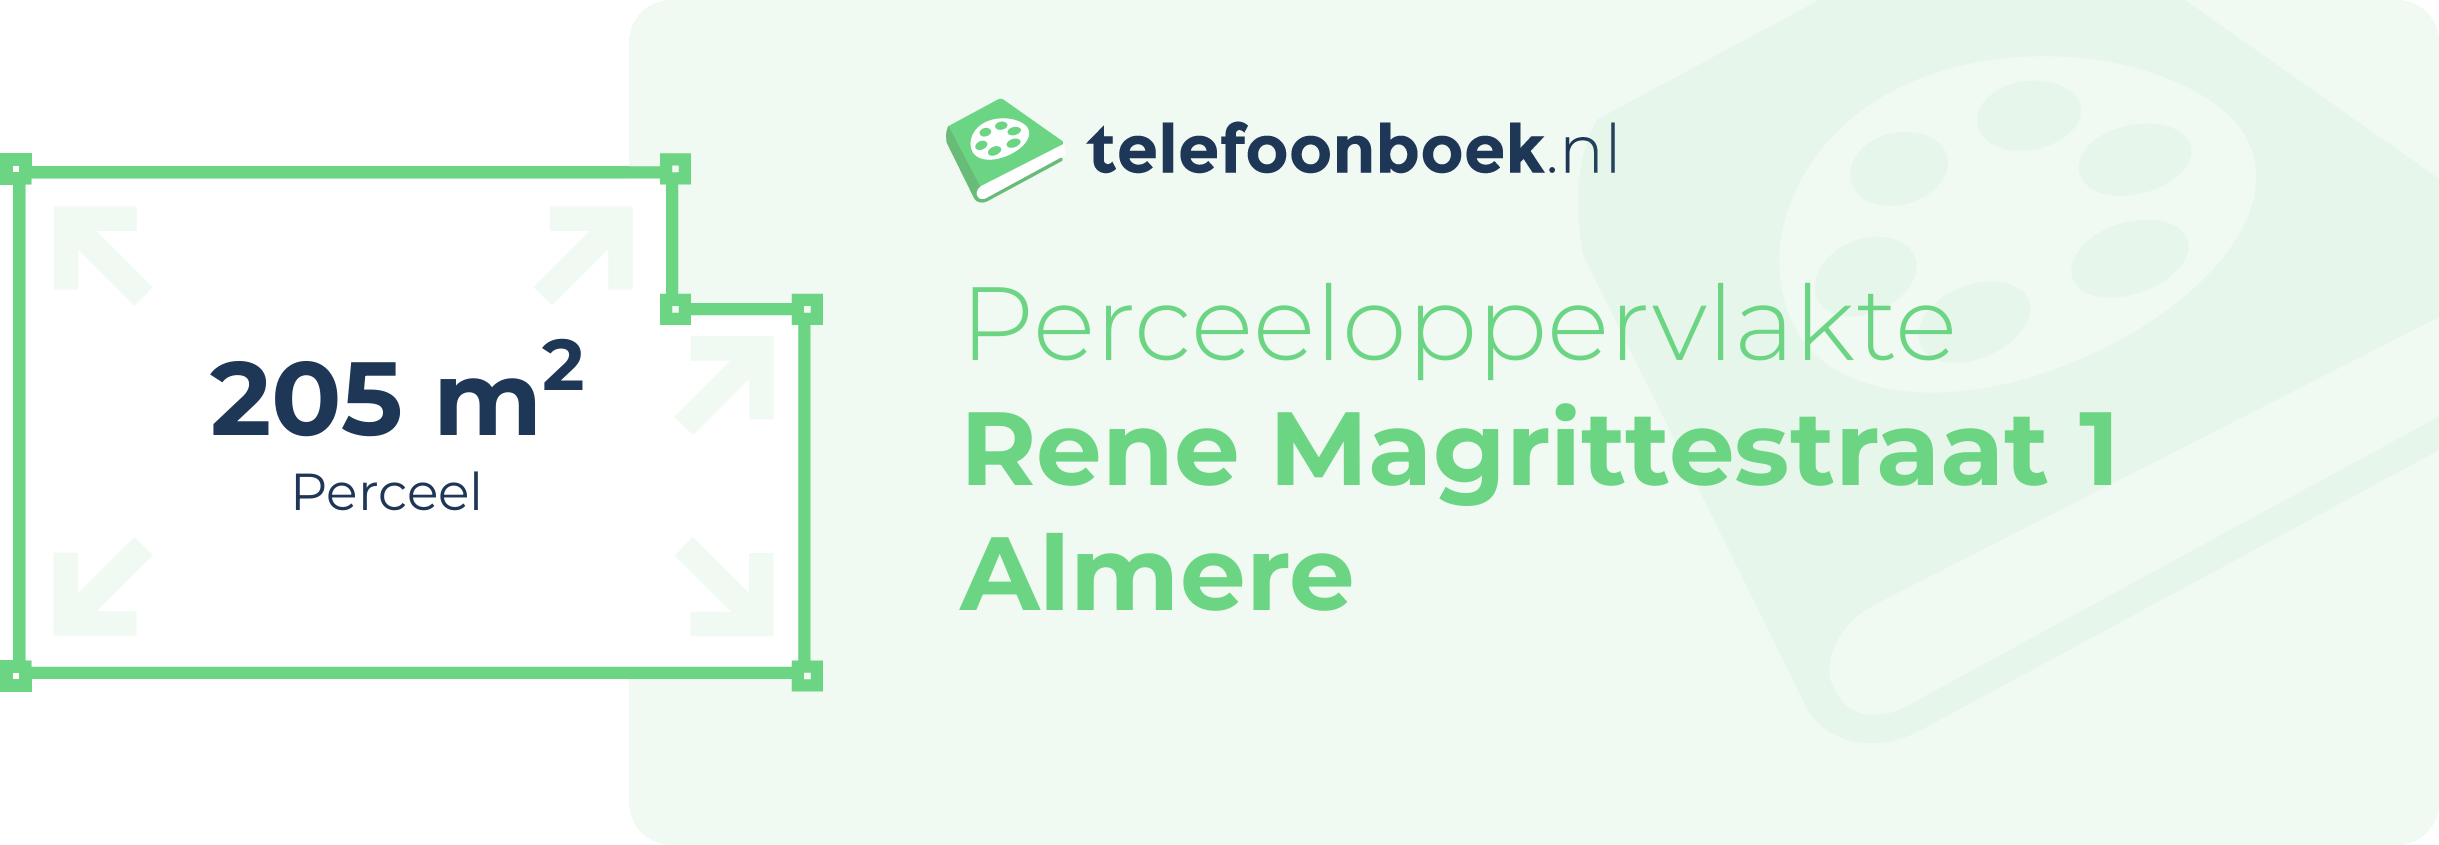 Perceeloppervlakte Rene Magrittestraat 1 Almere